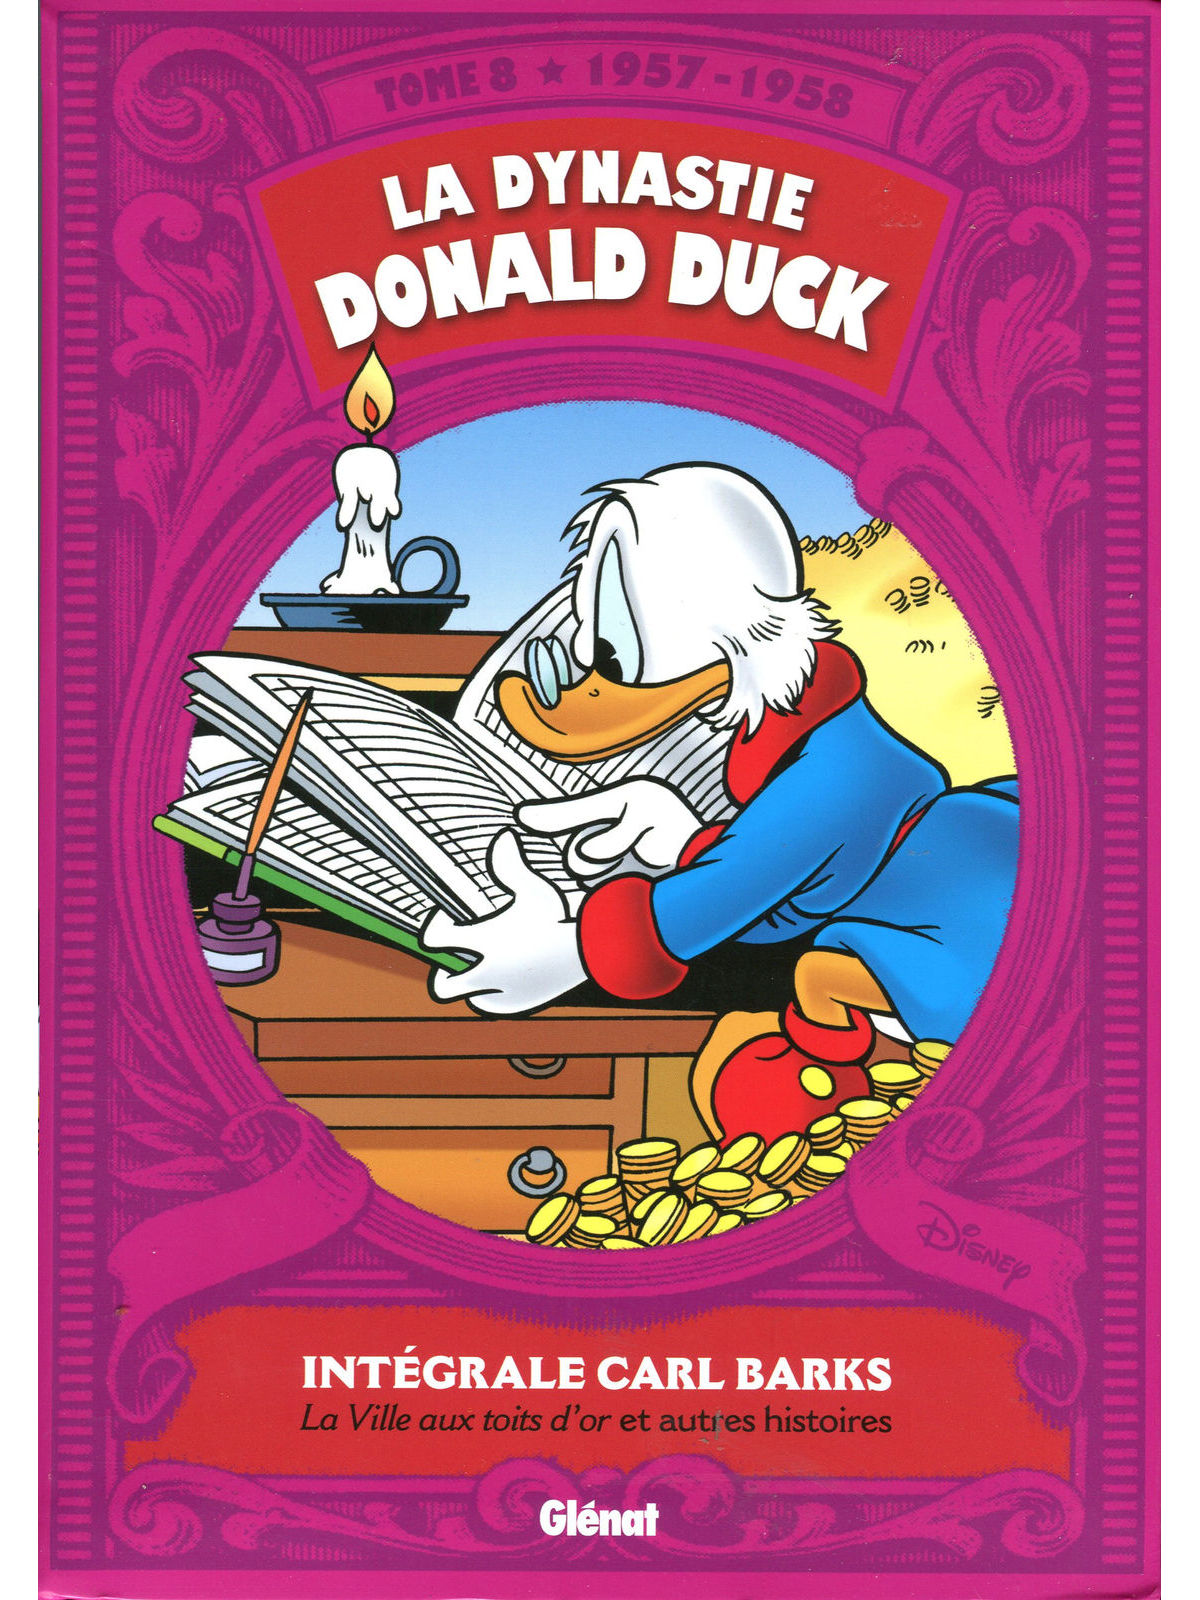 donald duck (la dynastie)